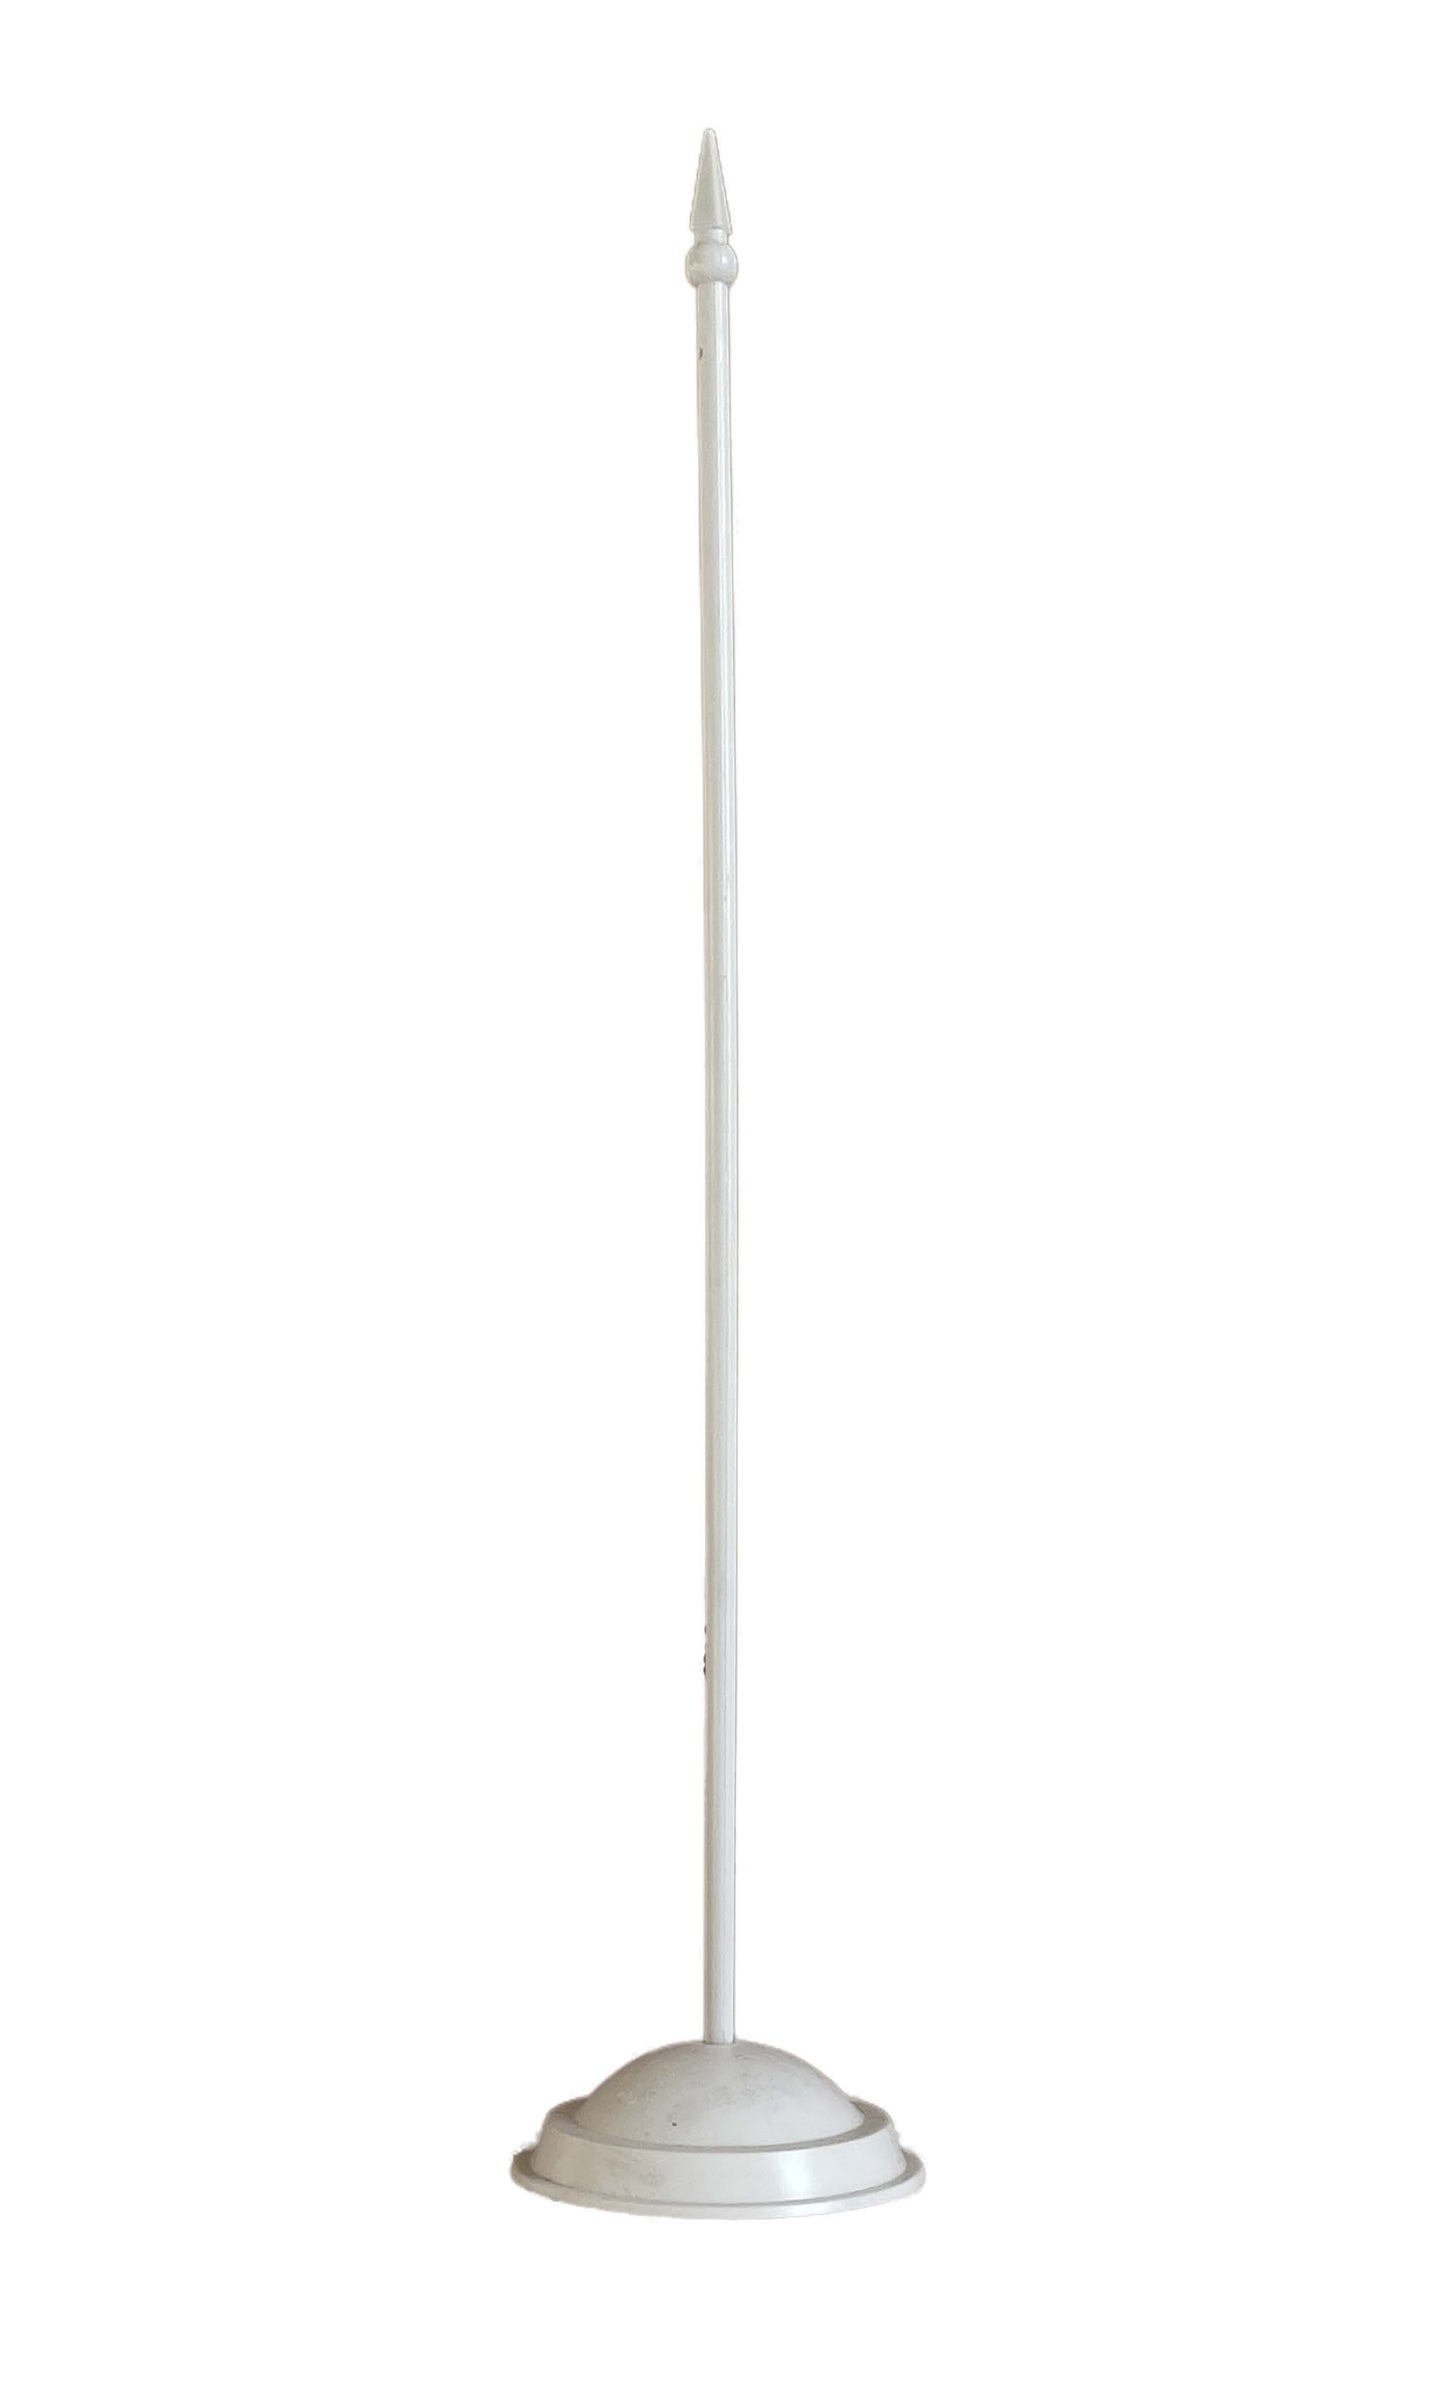 INR-STAND-31-PLASTIC-1 - подставка настольная на 1 шток, пластмассовая, высотой: 31 см